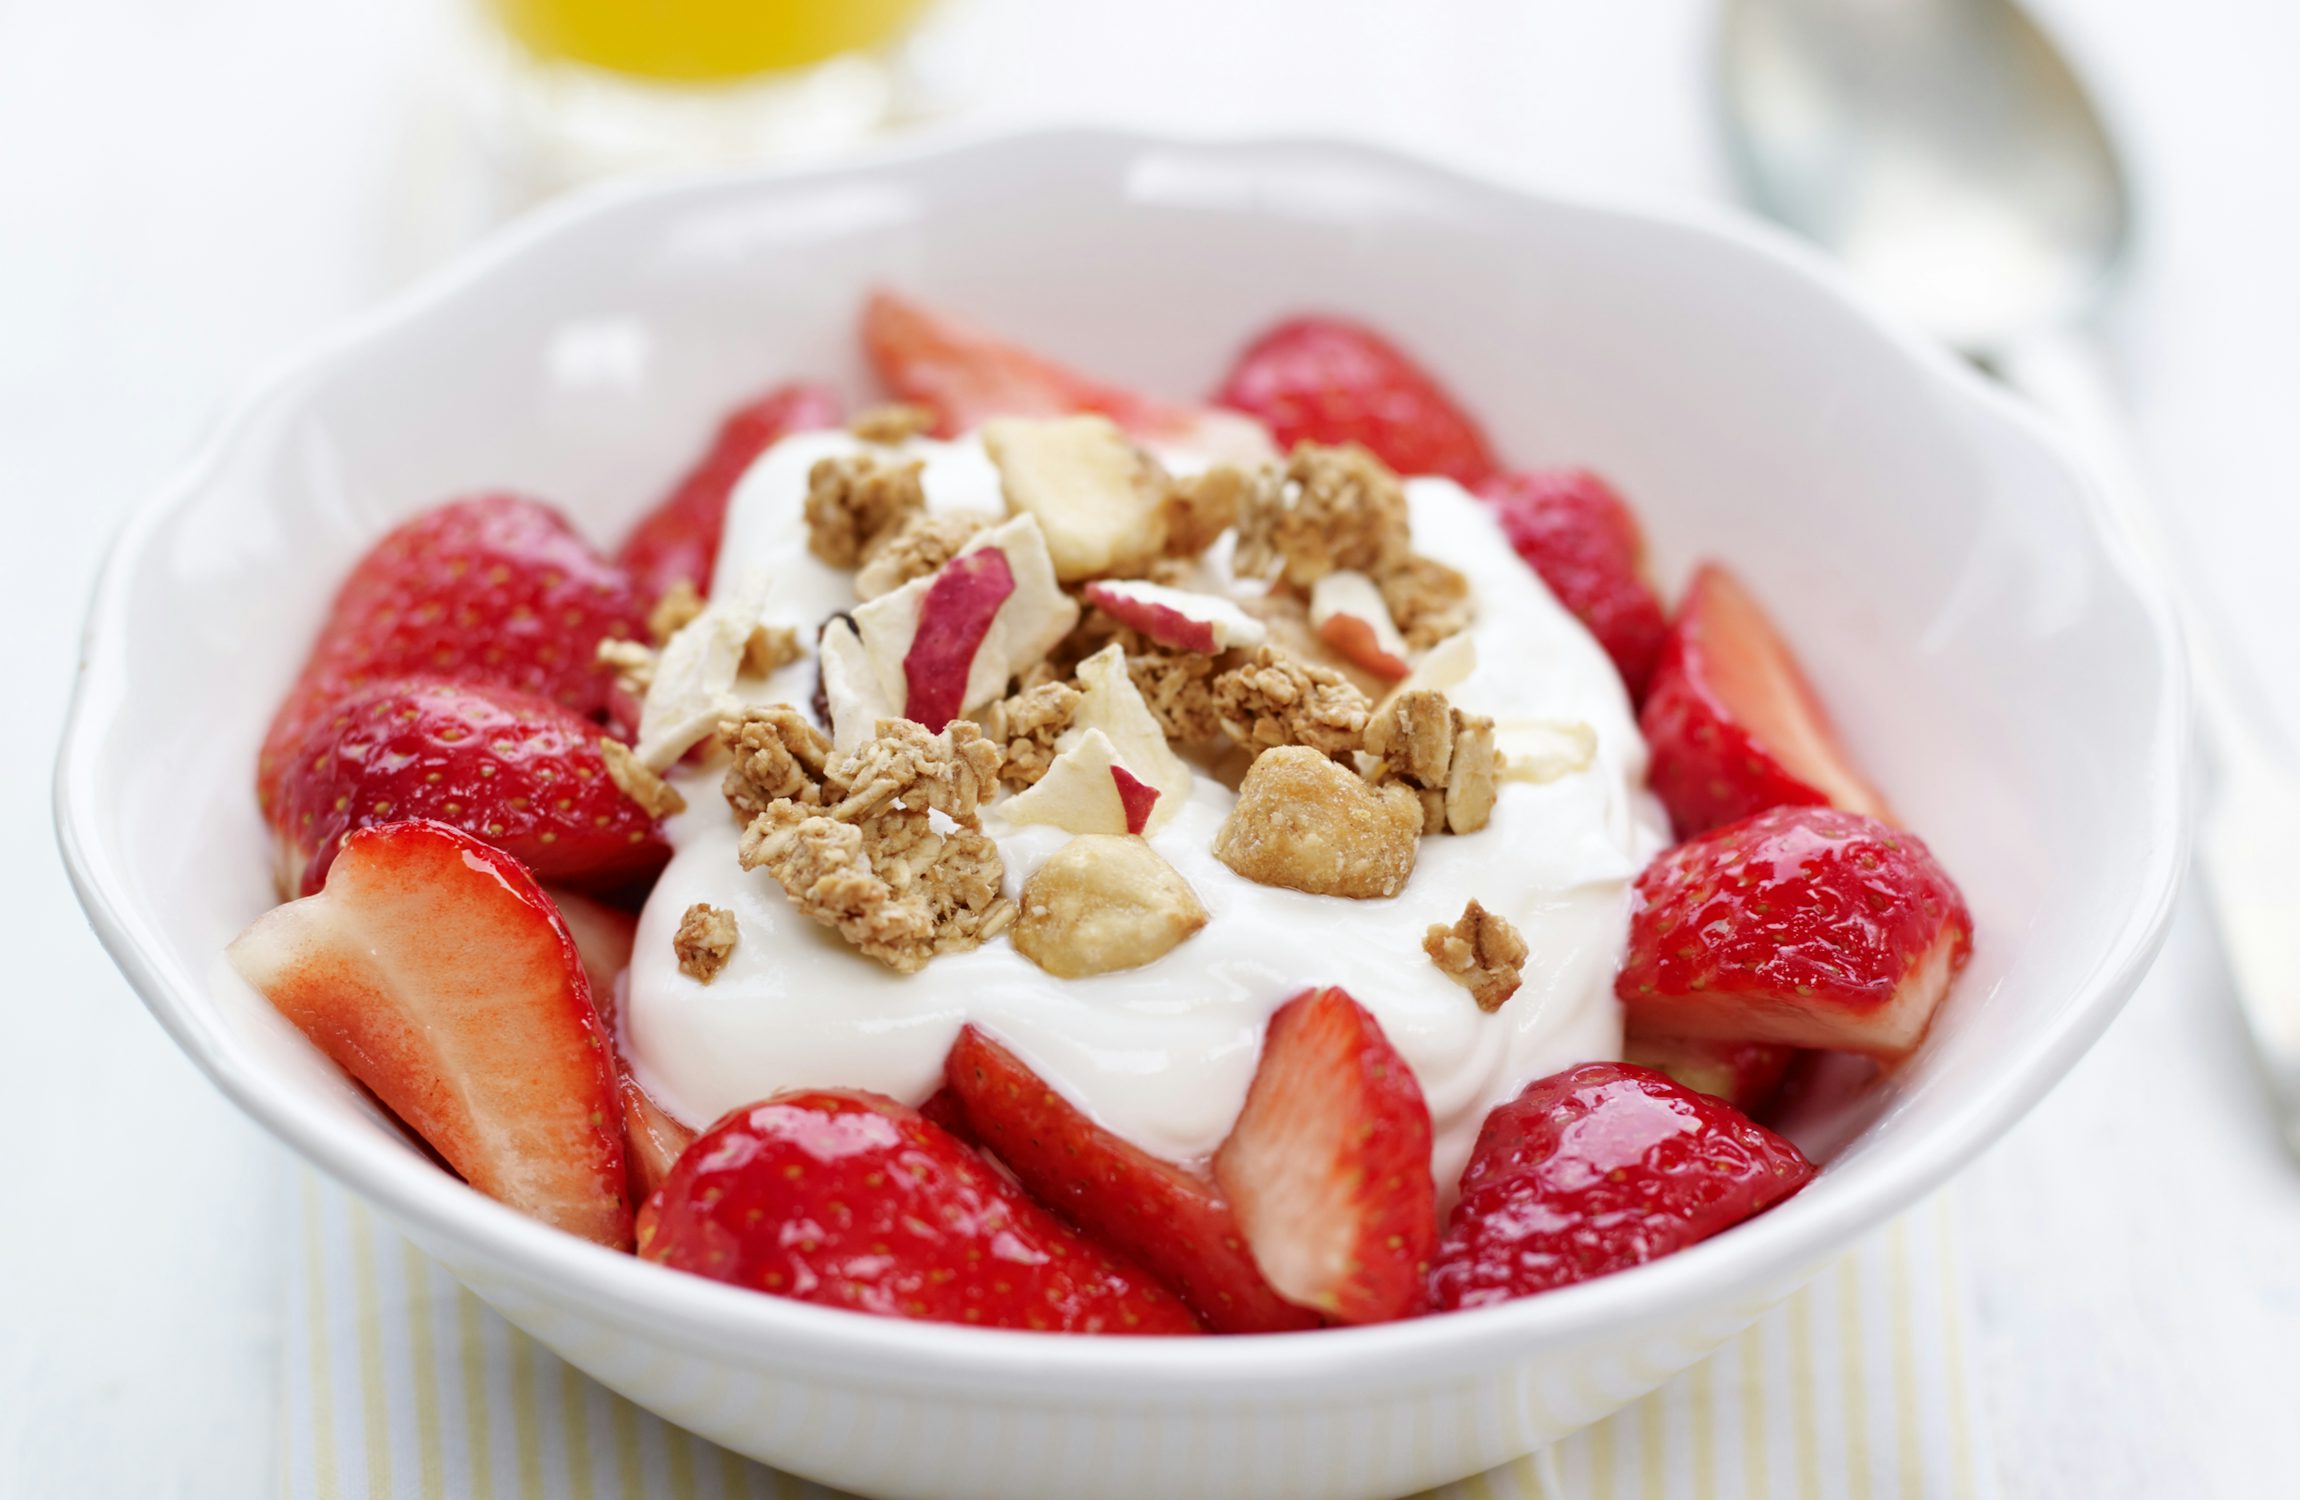 Marinated Strawberries with Natural Yoghurt